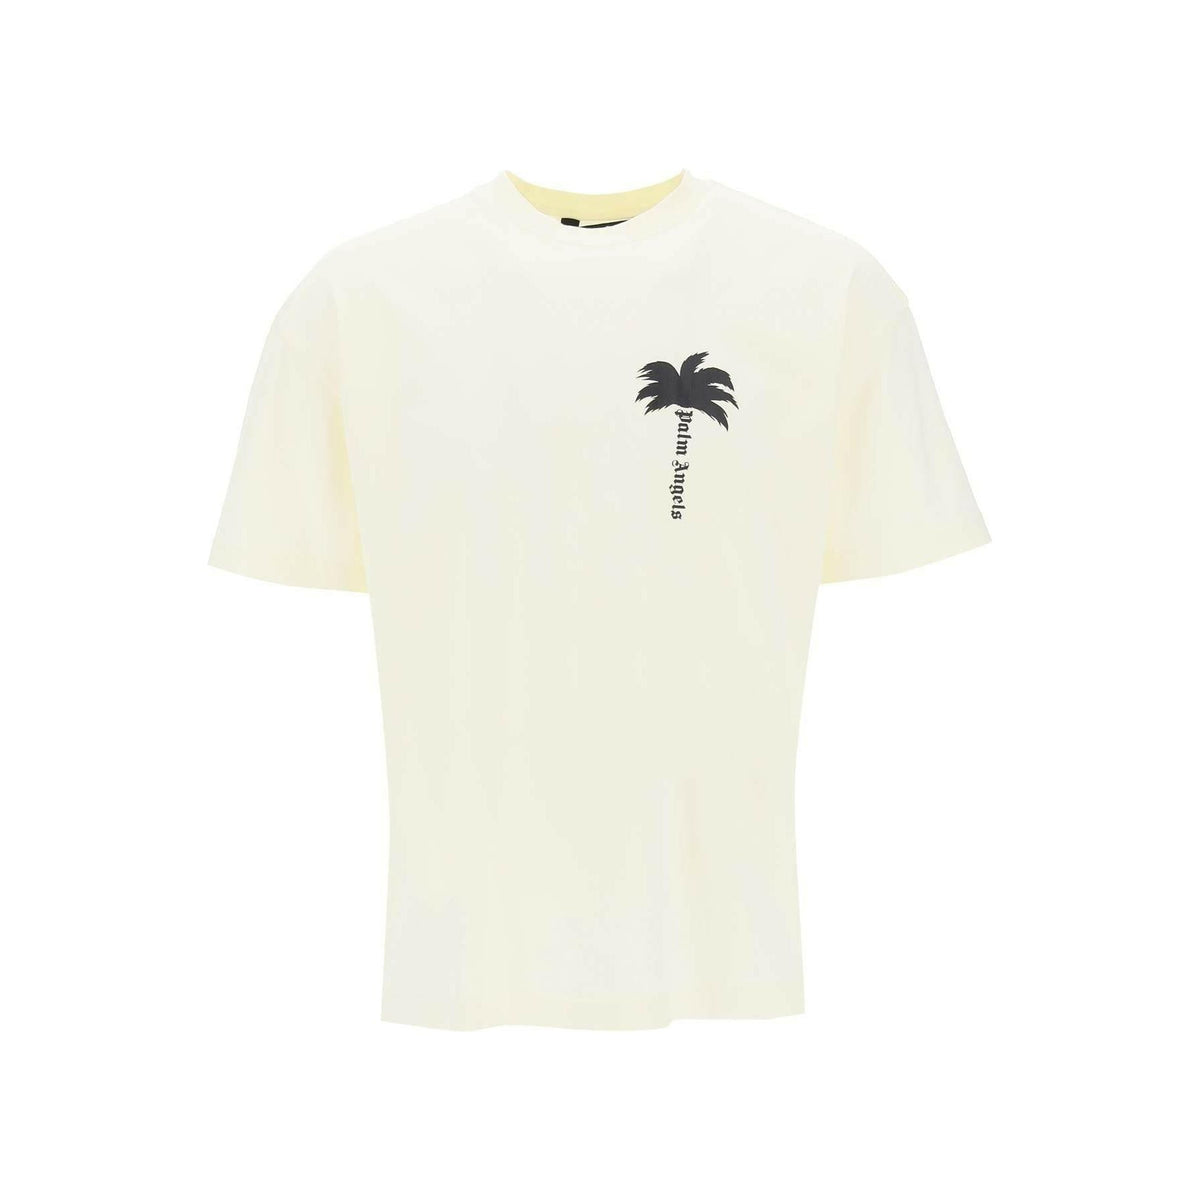 Off-White Palm Tree Print Cotton T-Shirt PALM ANGELS JOHN JULIA.